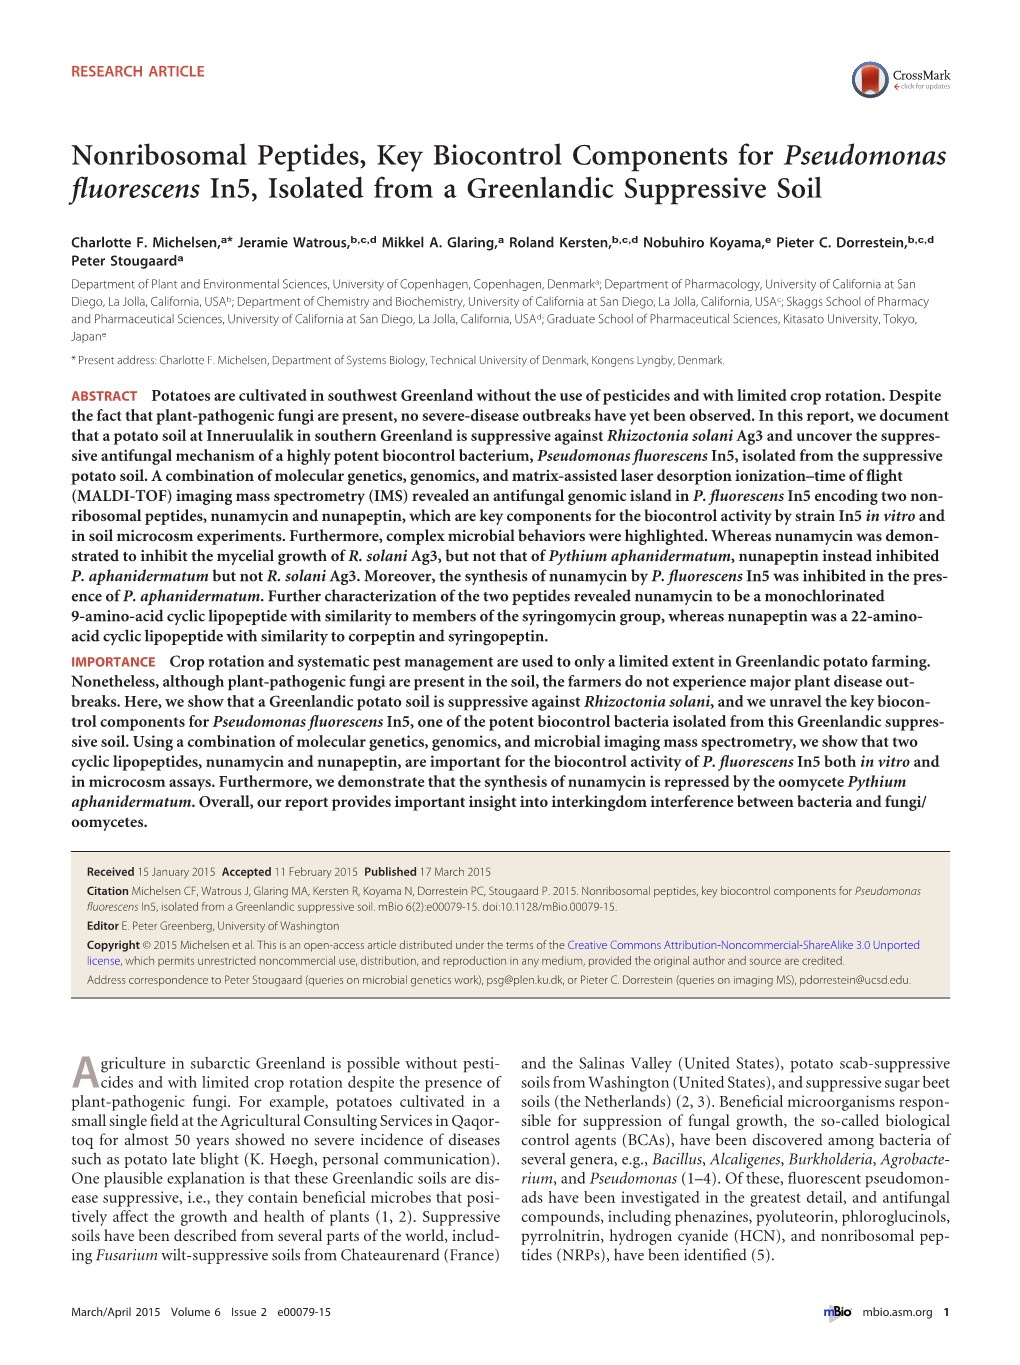 Nonribosomal Peptides, Key Biocontrol Components for Pseudomonas Fluorescens In5, Isolated from a Greenlandic Suppressive Soil